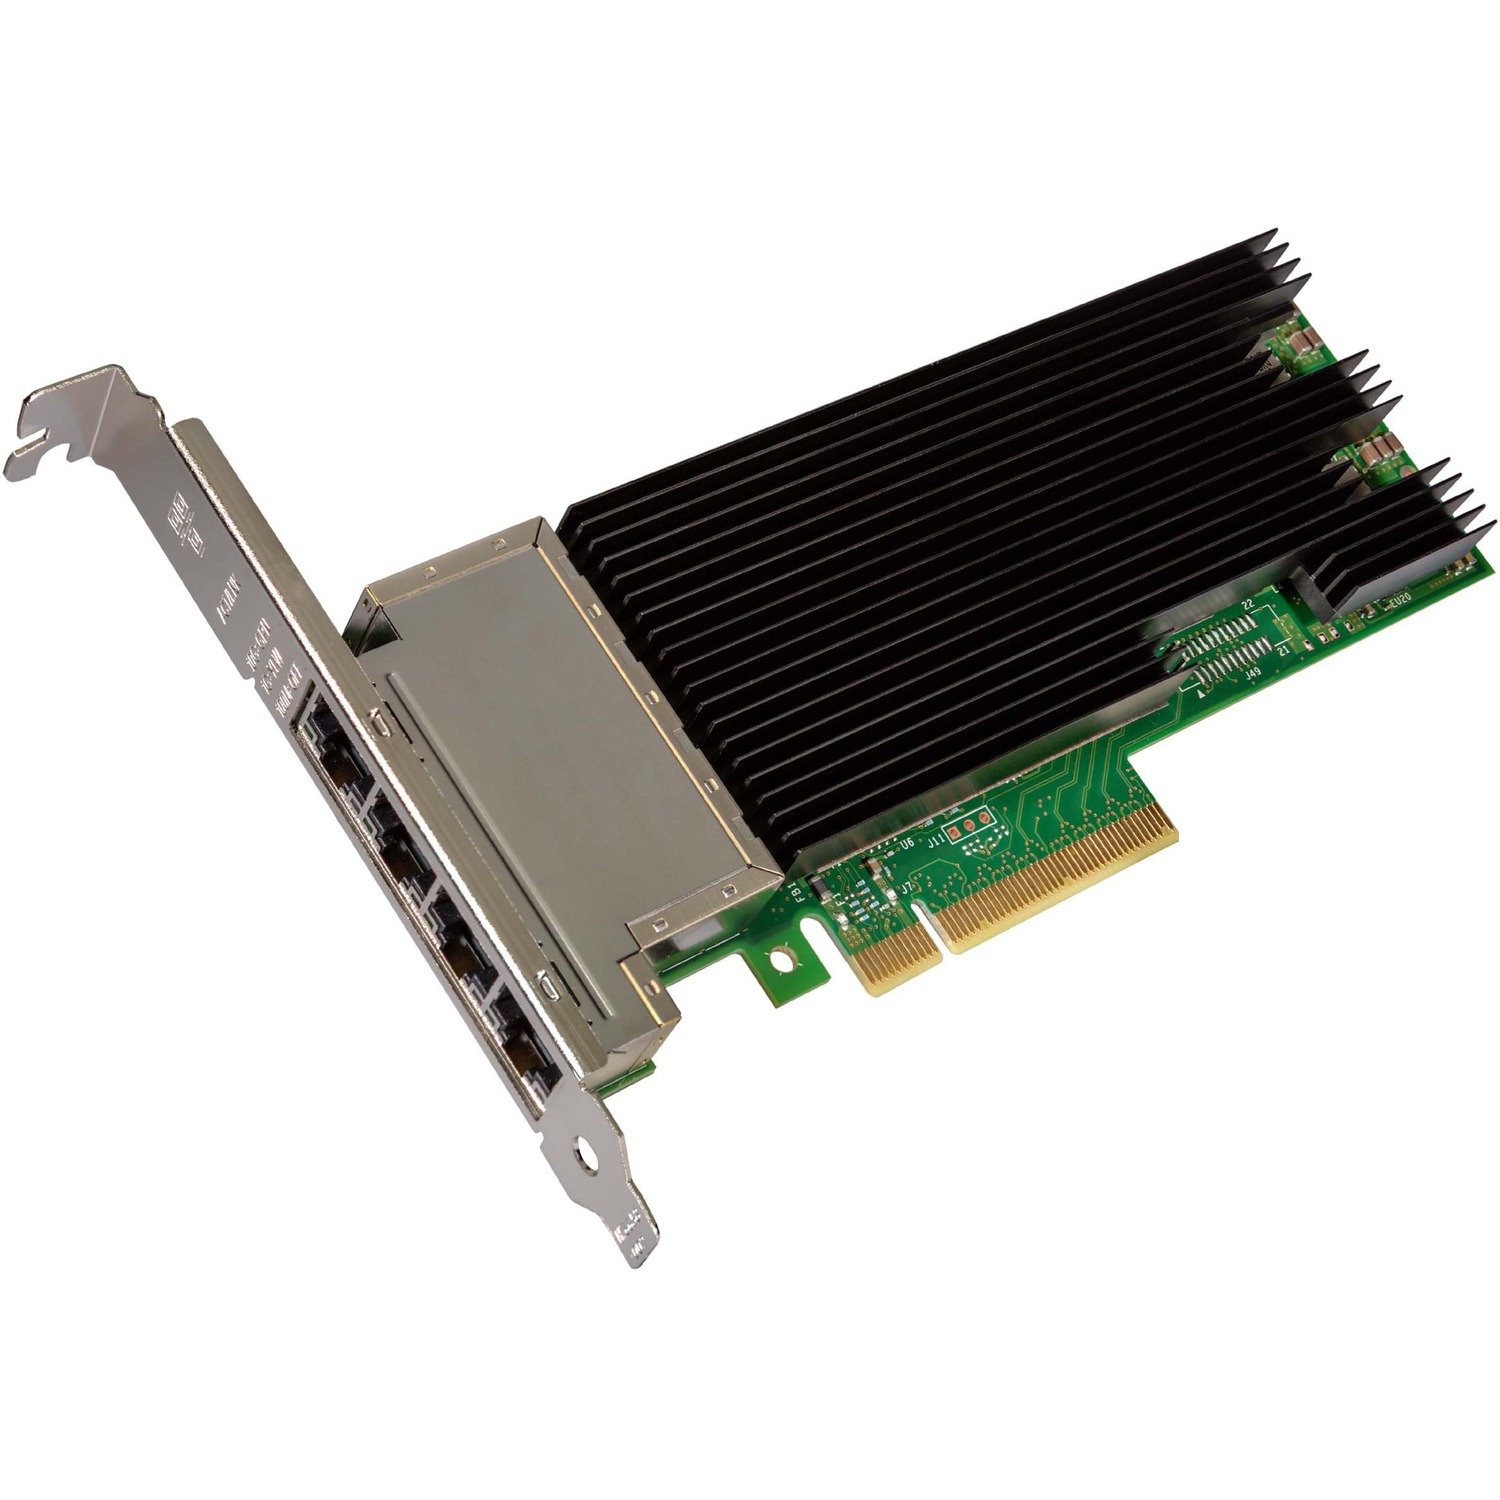 Intel X710 X710-T4 Gigabit Ethernet Card for Server - 10/100/1000Base-T - Plug-in Card